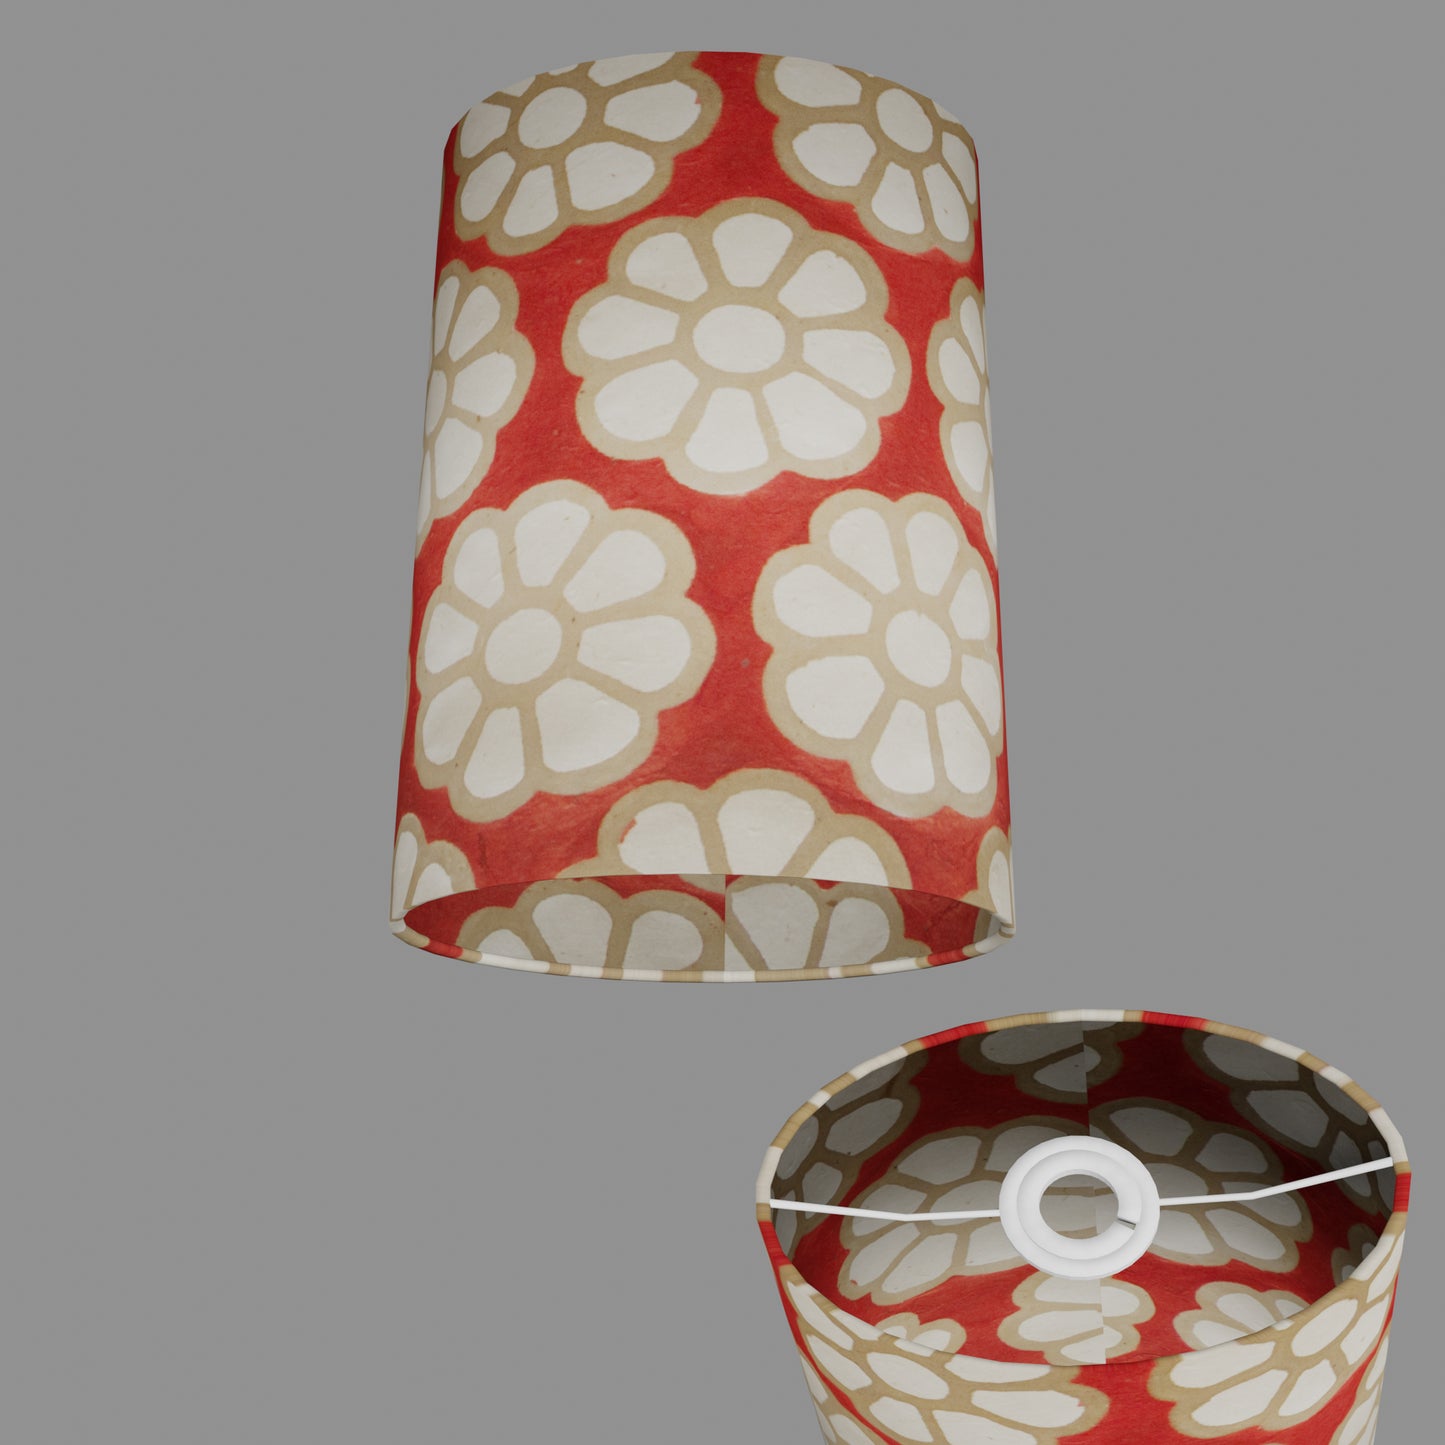 Oval Lamp Shade - P18 - Batik Big Flower on Red, 20cm(w) x 30cm(h) x 13cm(d)